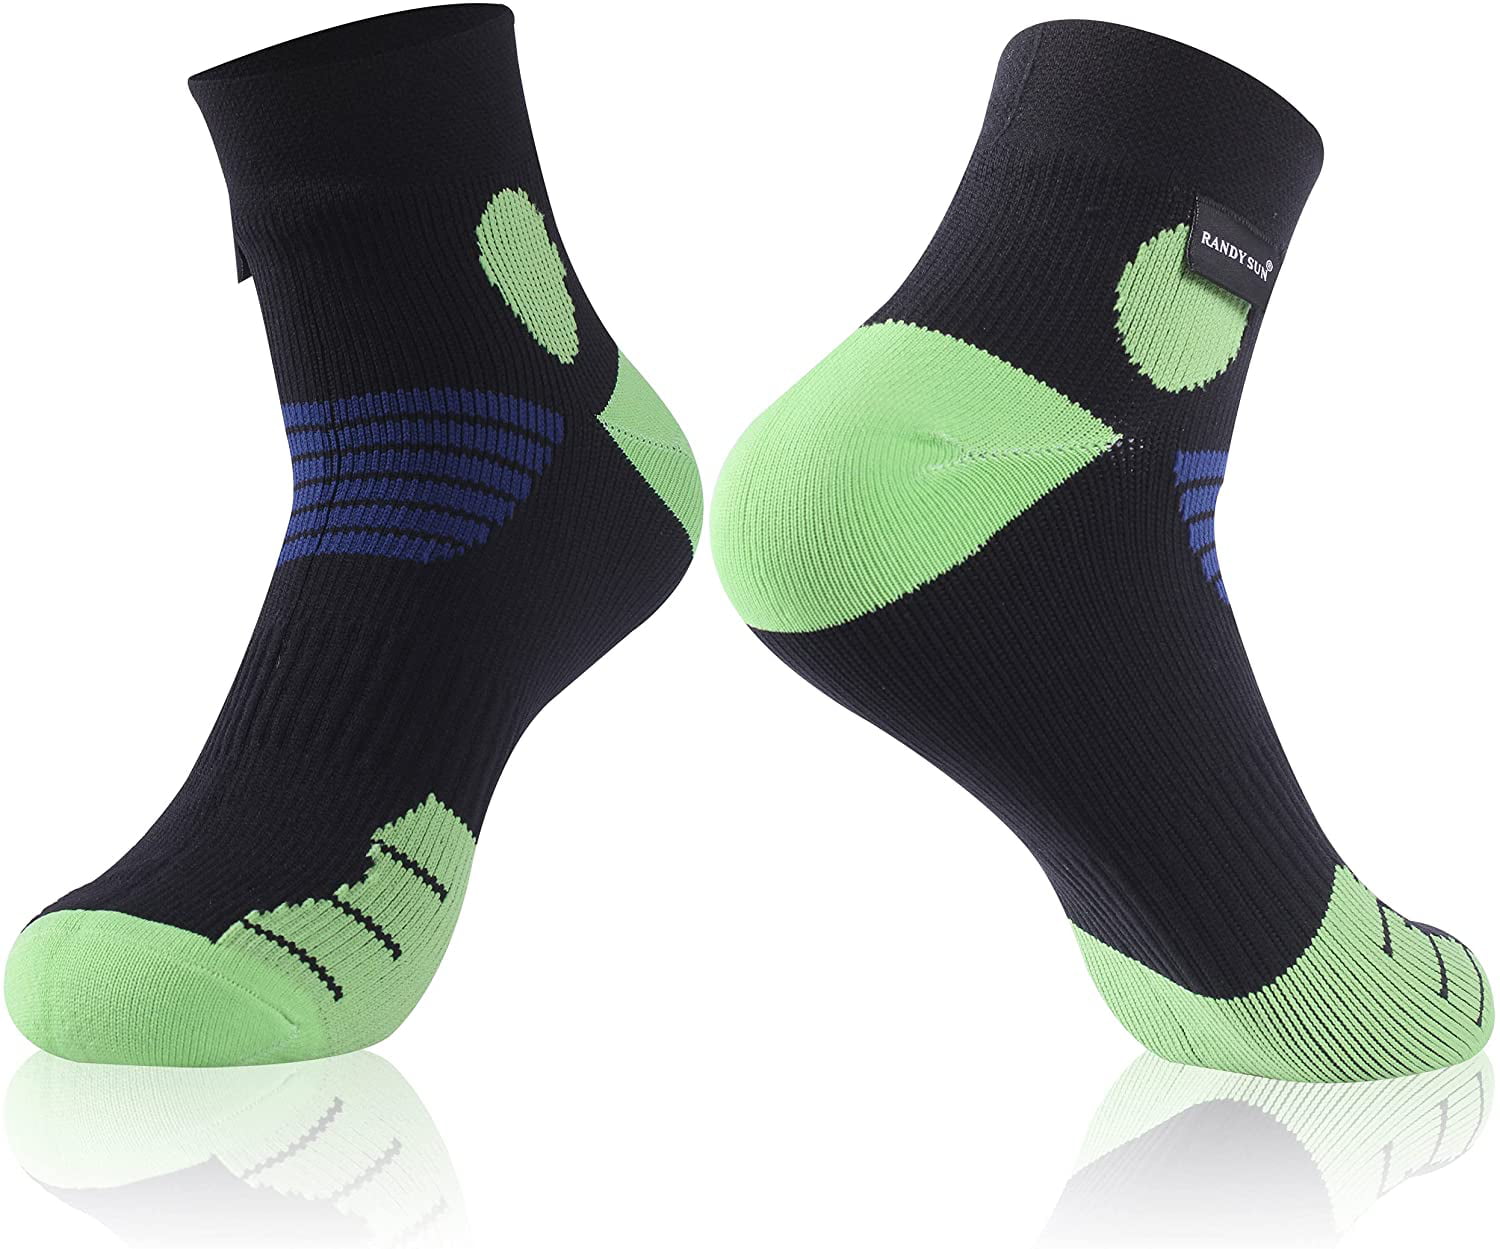 RANDY SUN 100% Waterproof Socks Unisex Cycling/Hunting/Fishing/Running Ankle Socks 1 Pair 